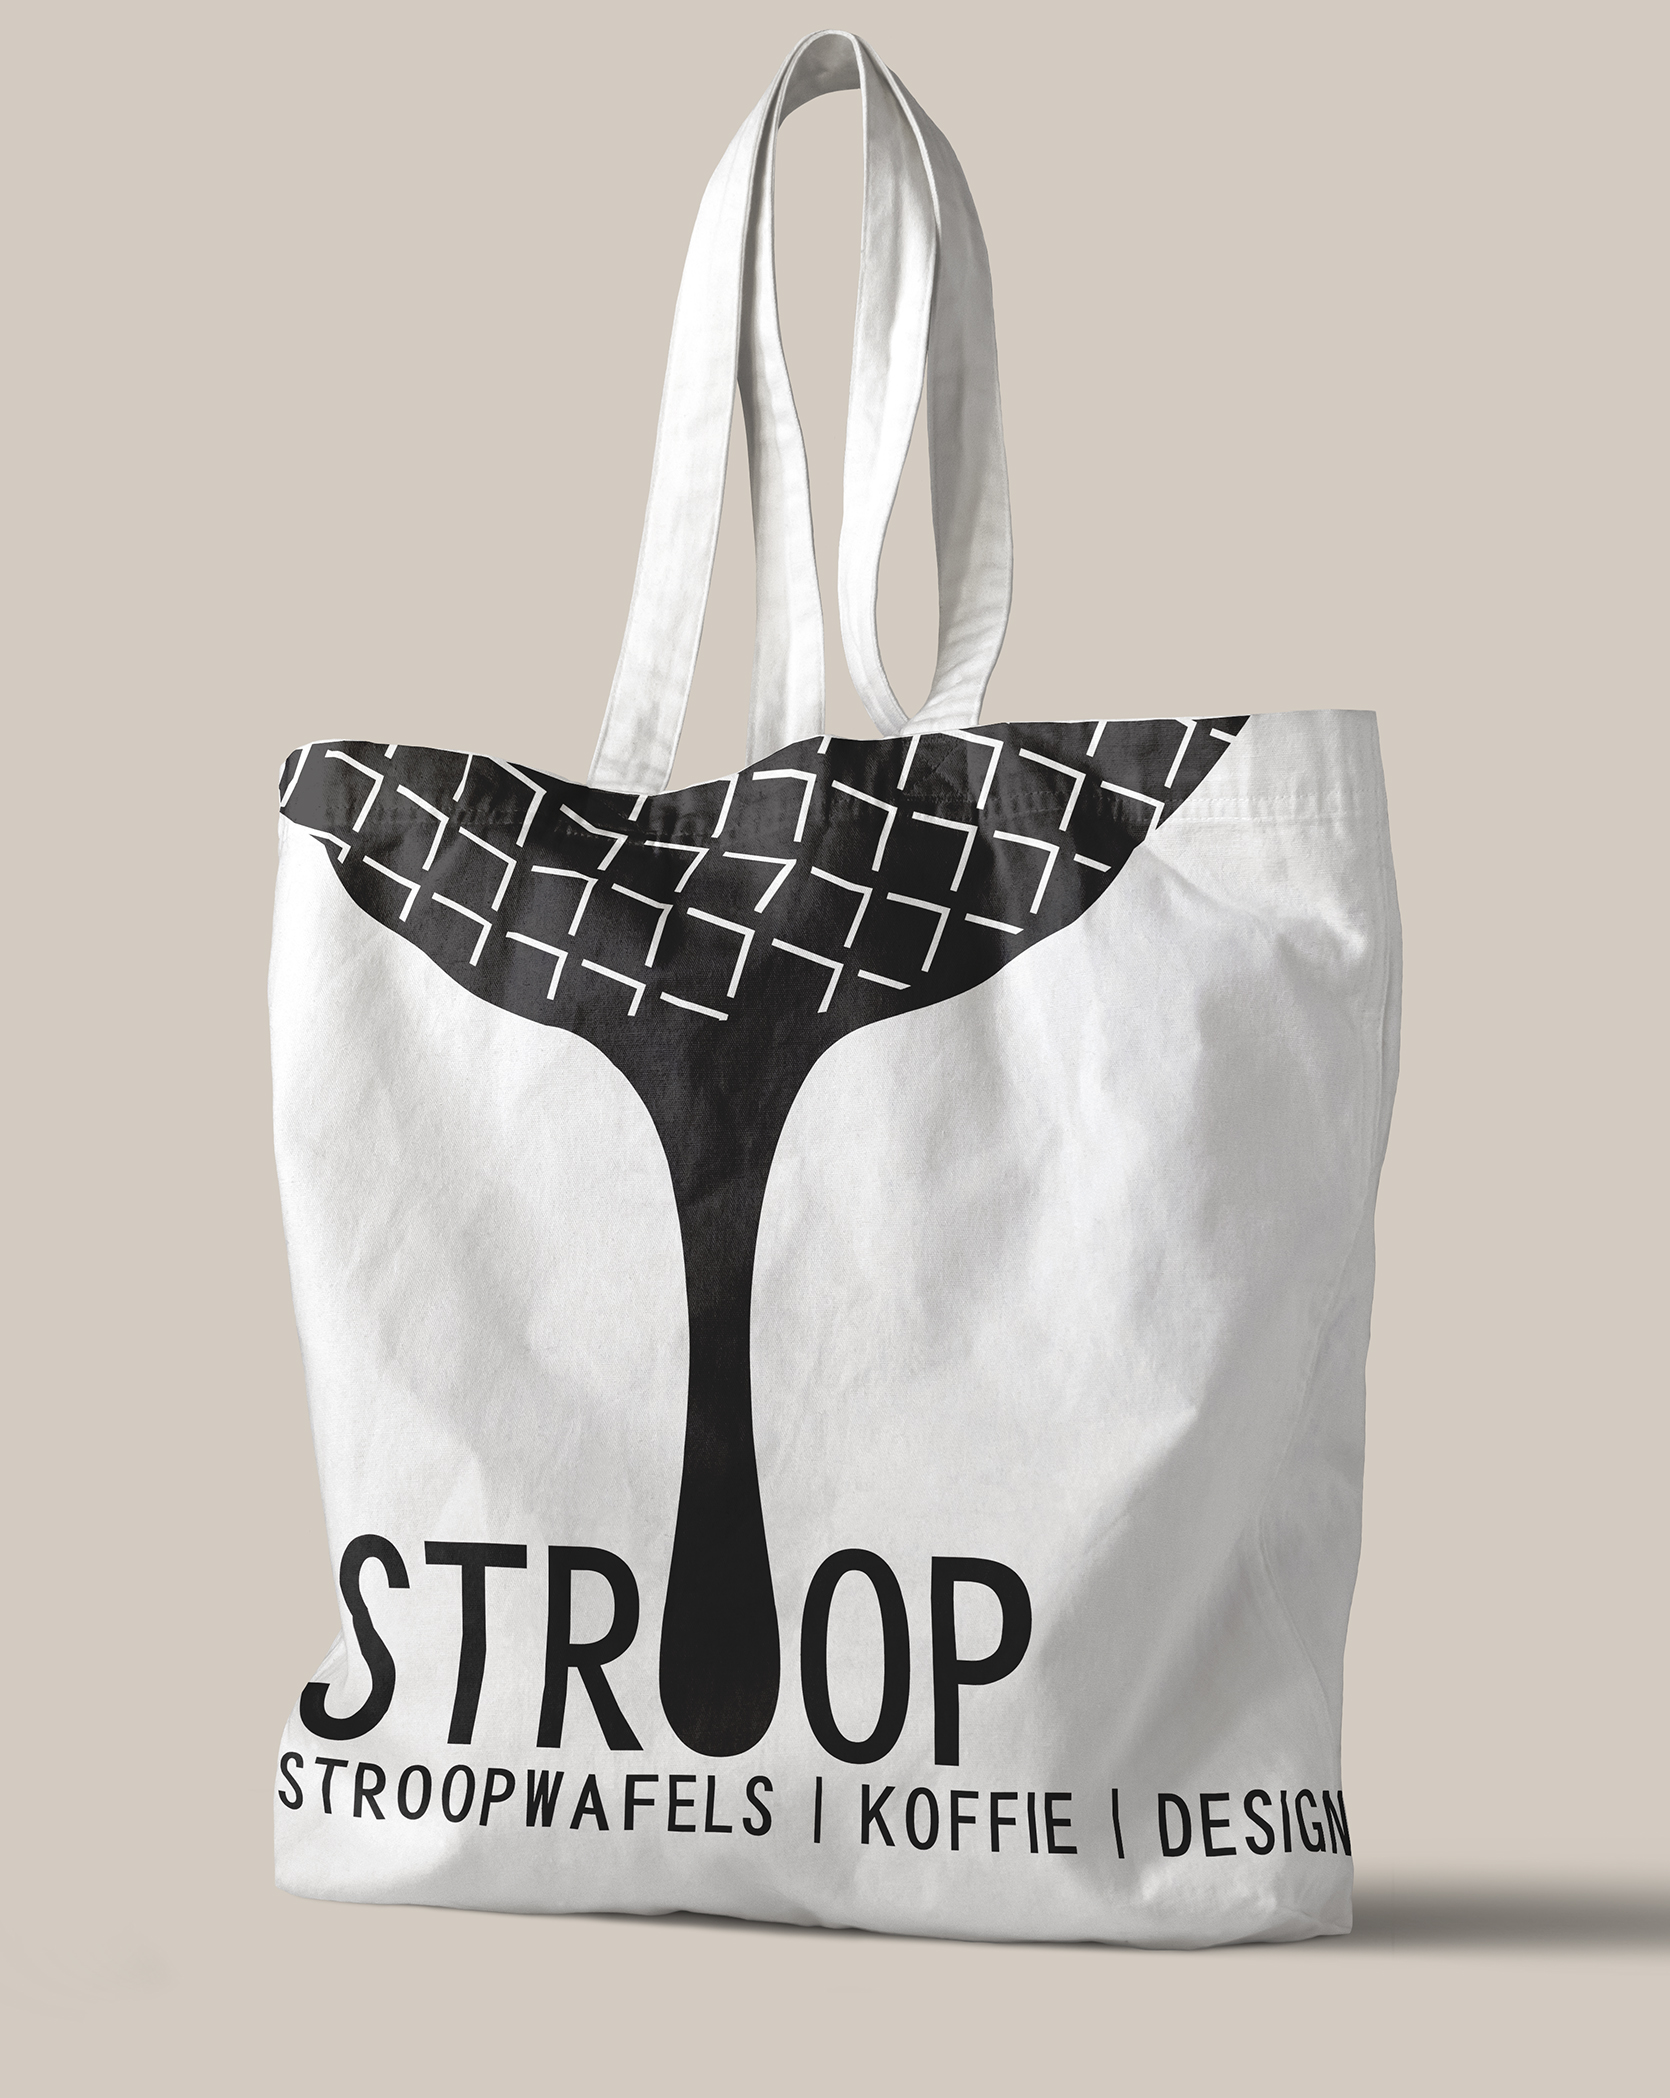 STROOP Tote bag design by WUUDY